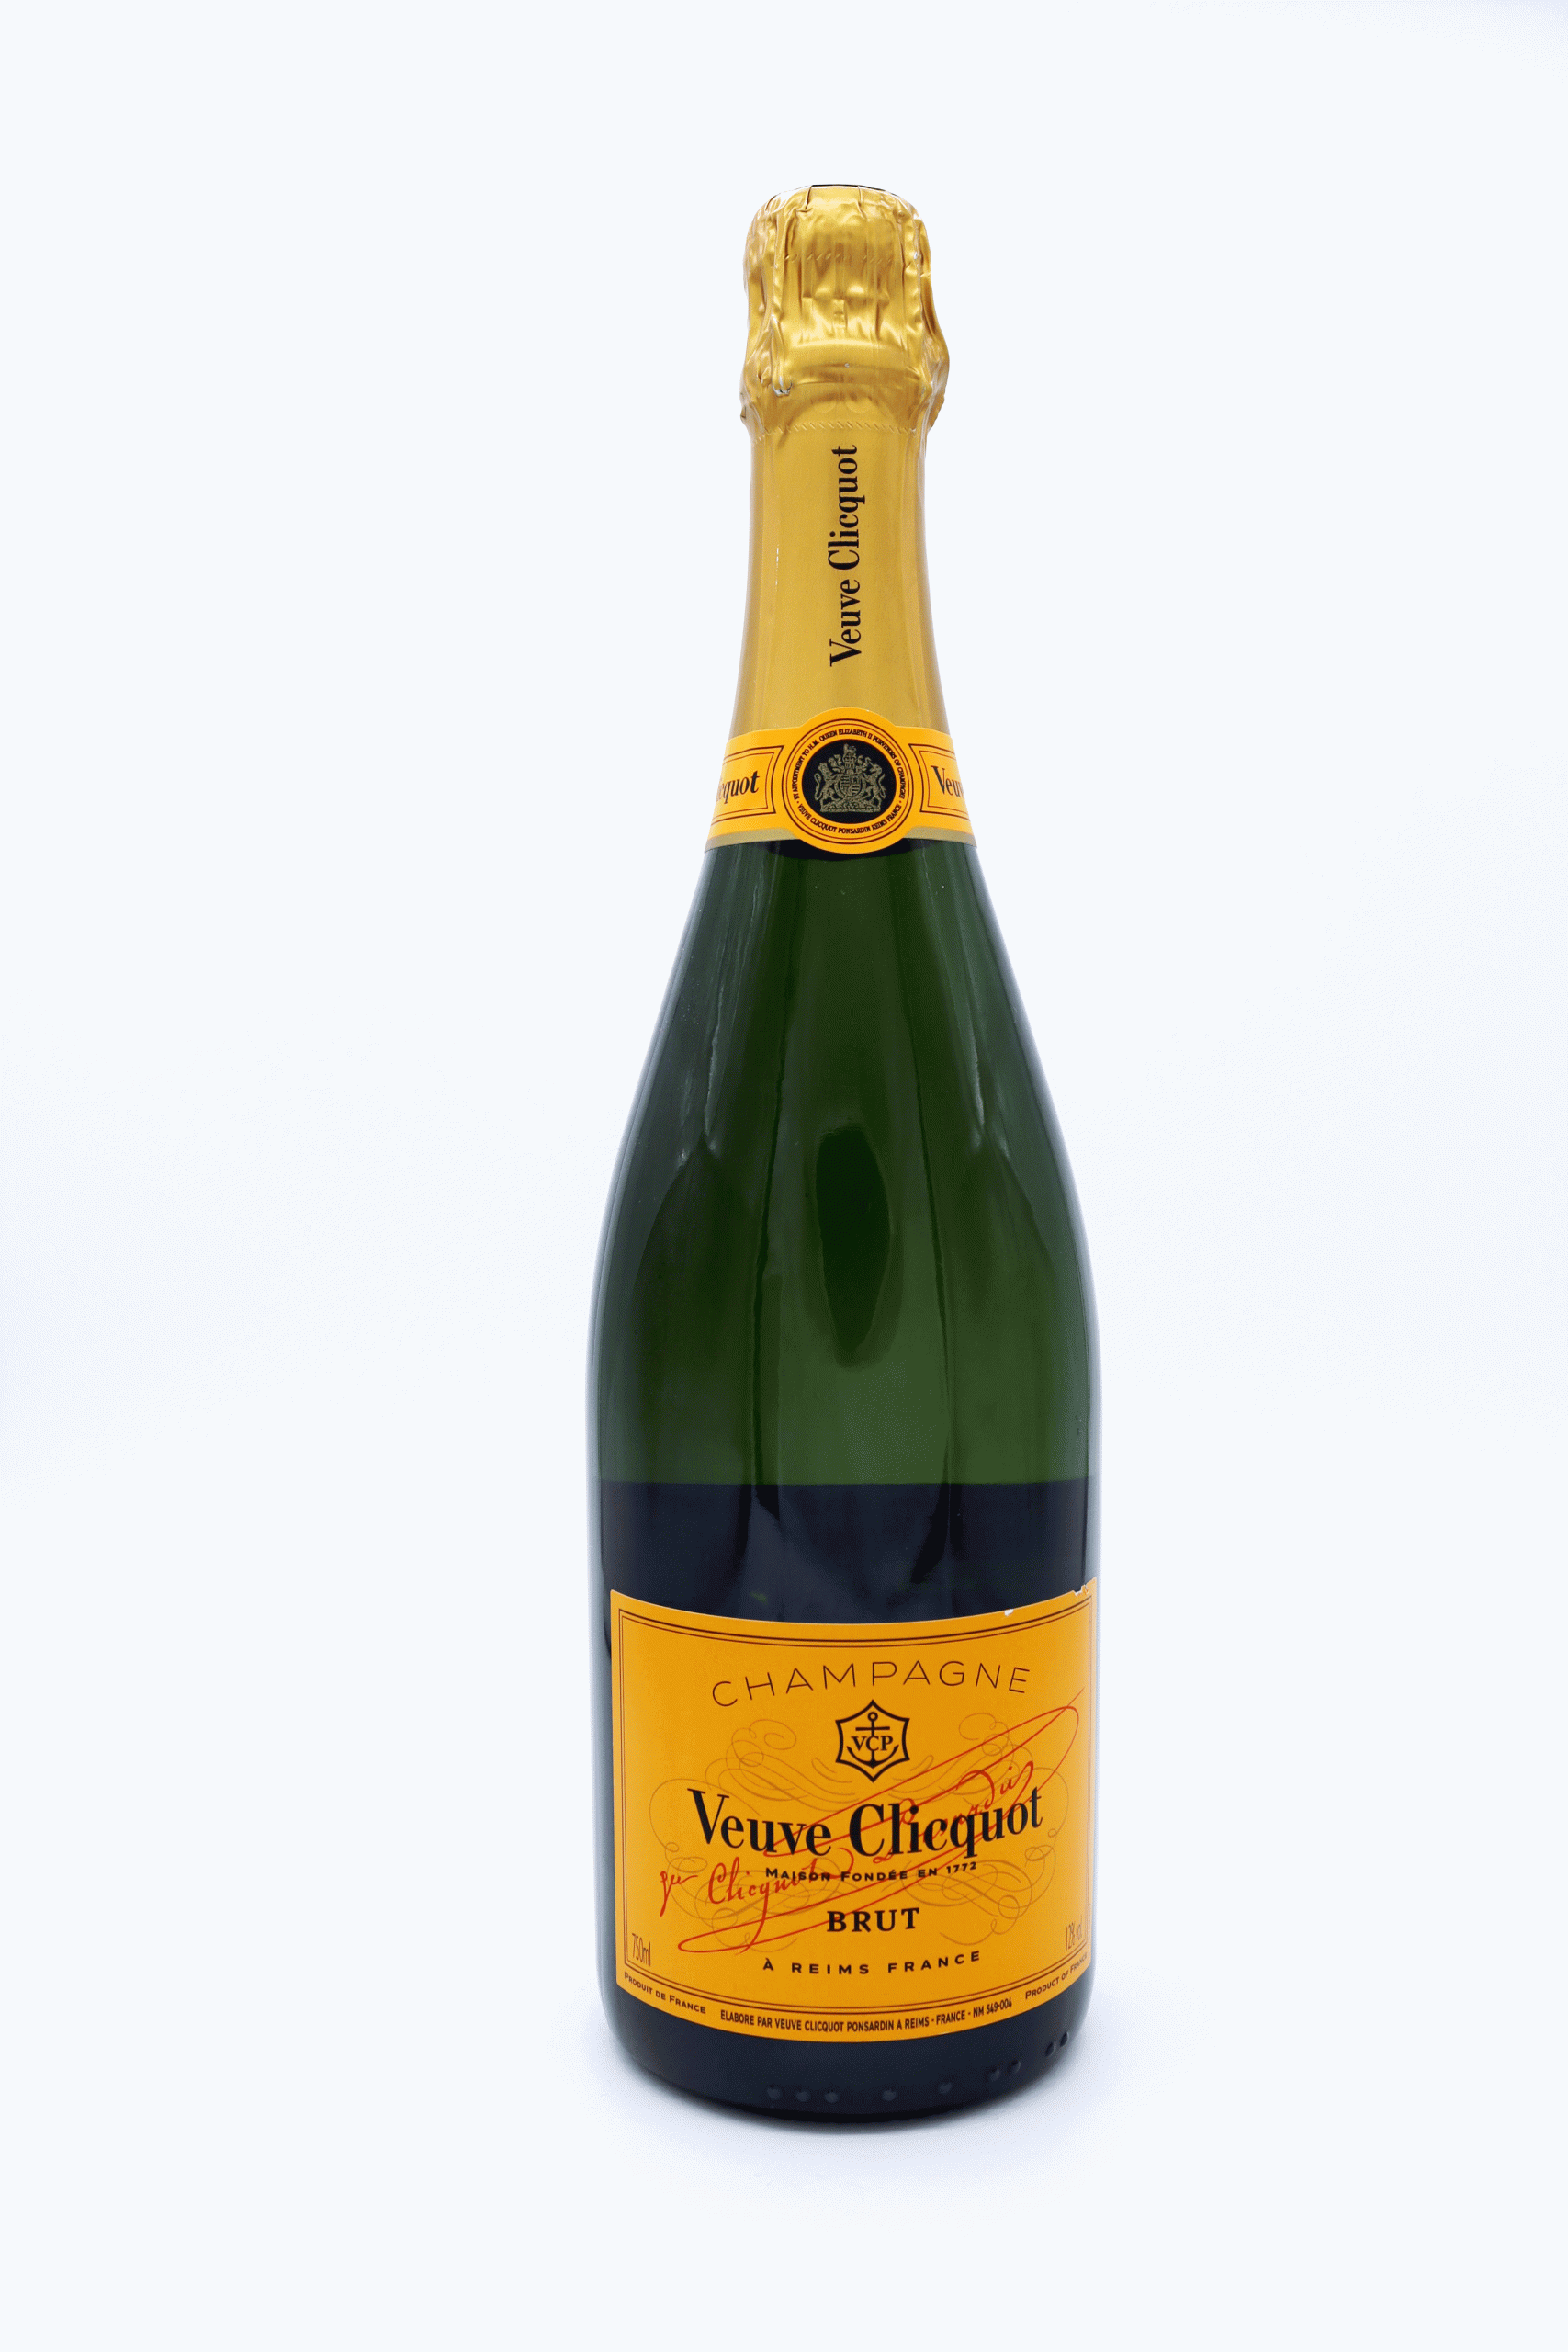 Champagne Veuve cliequot Brut - Bodega Montferry